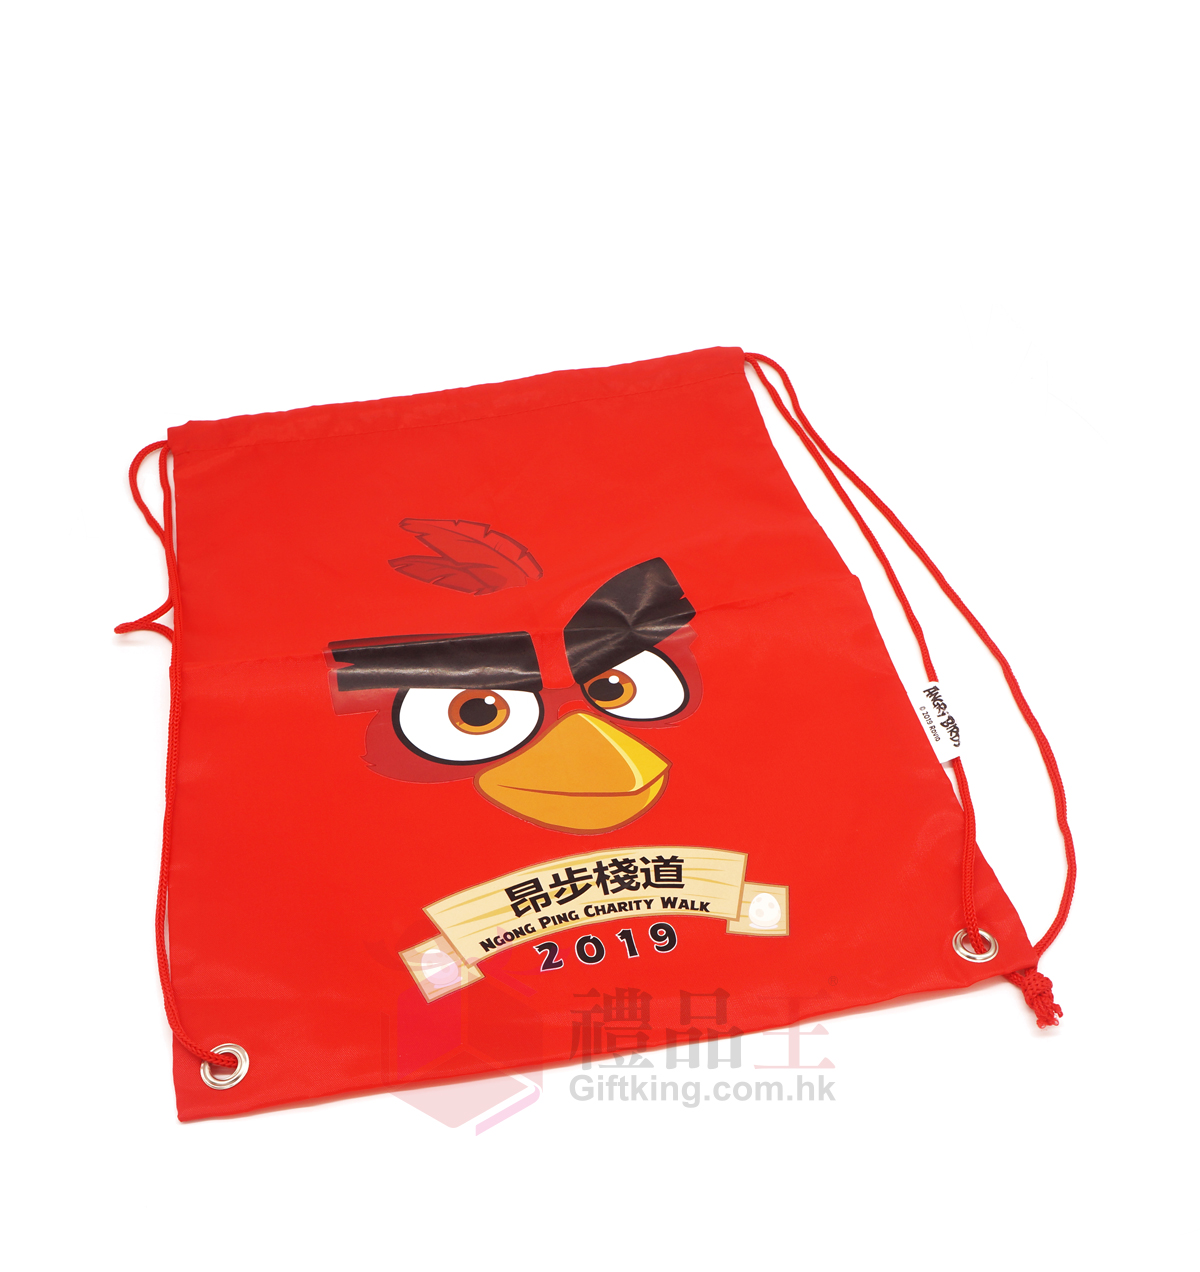 Hong Kong Youth Hostel Association Angry Birds Running Rope Bag (Charity Gift)